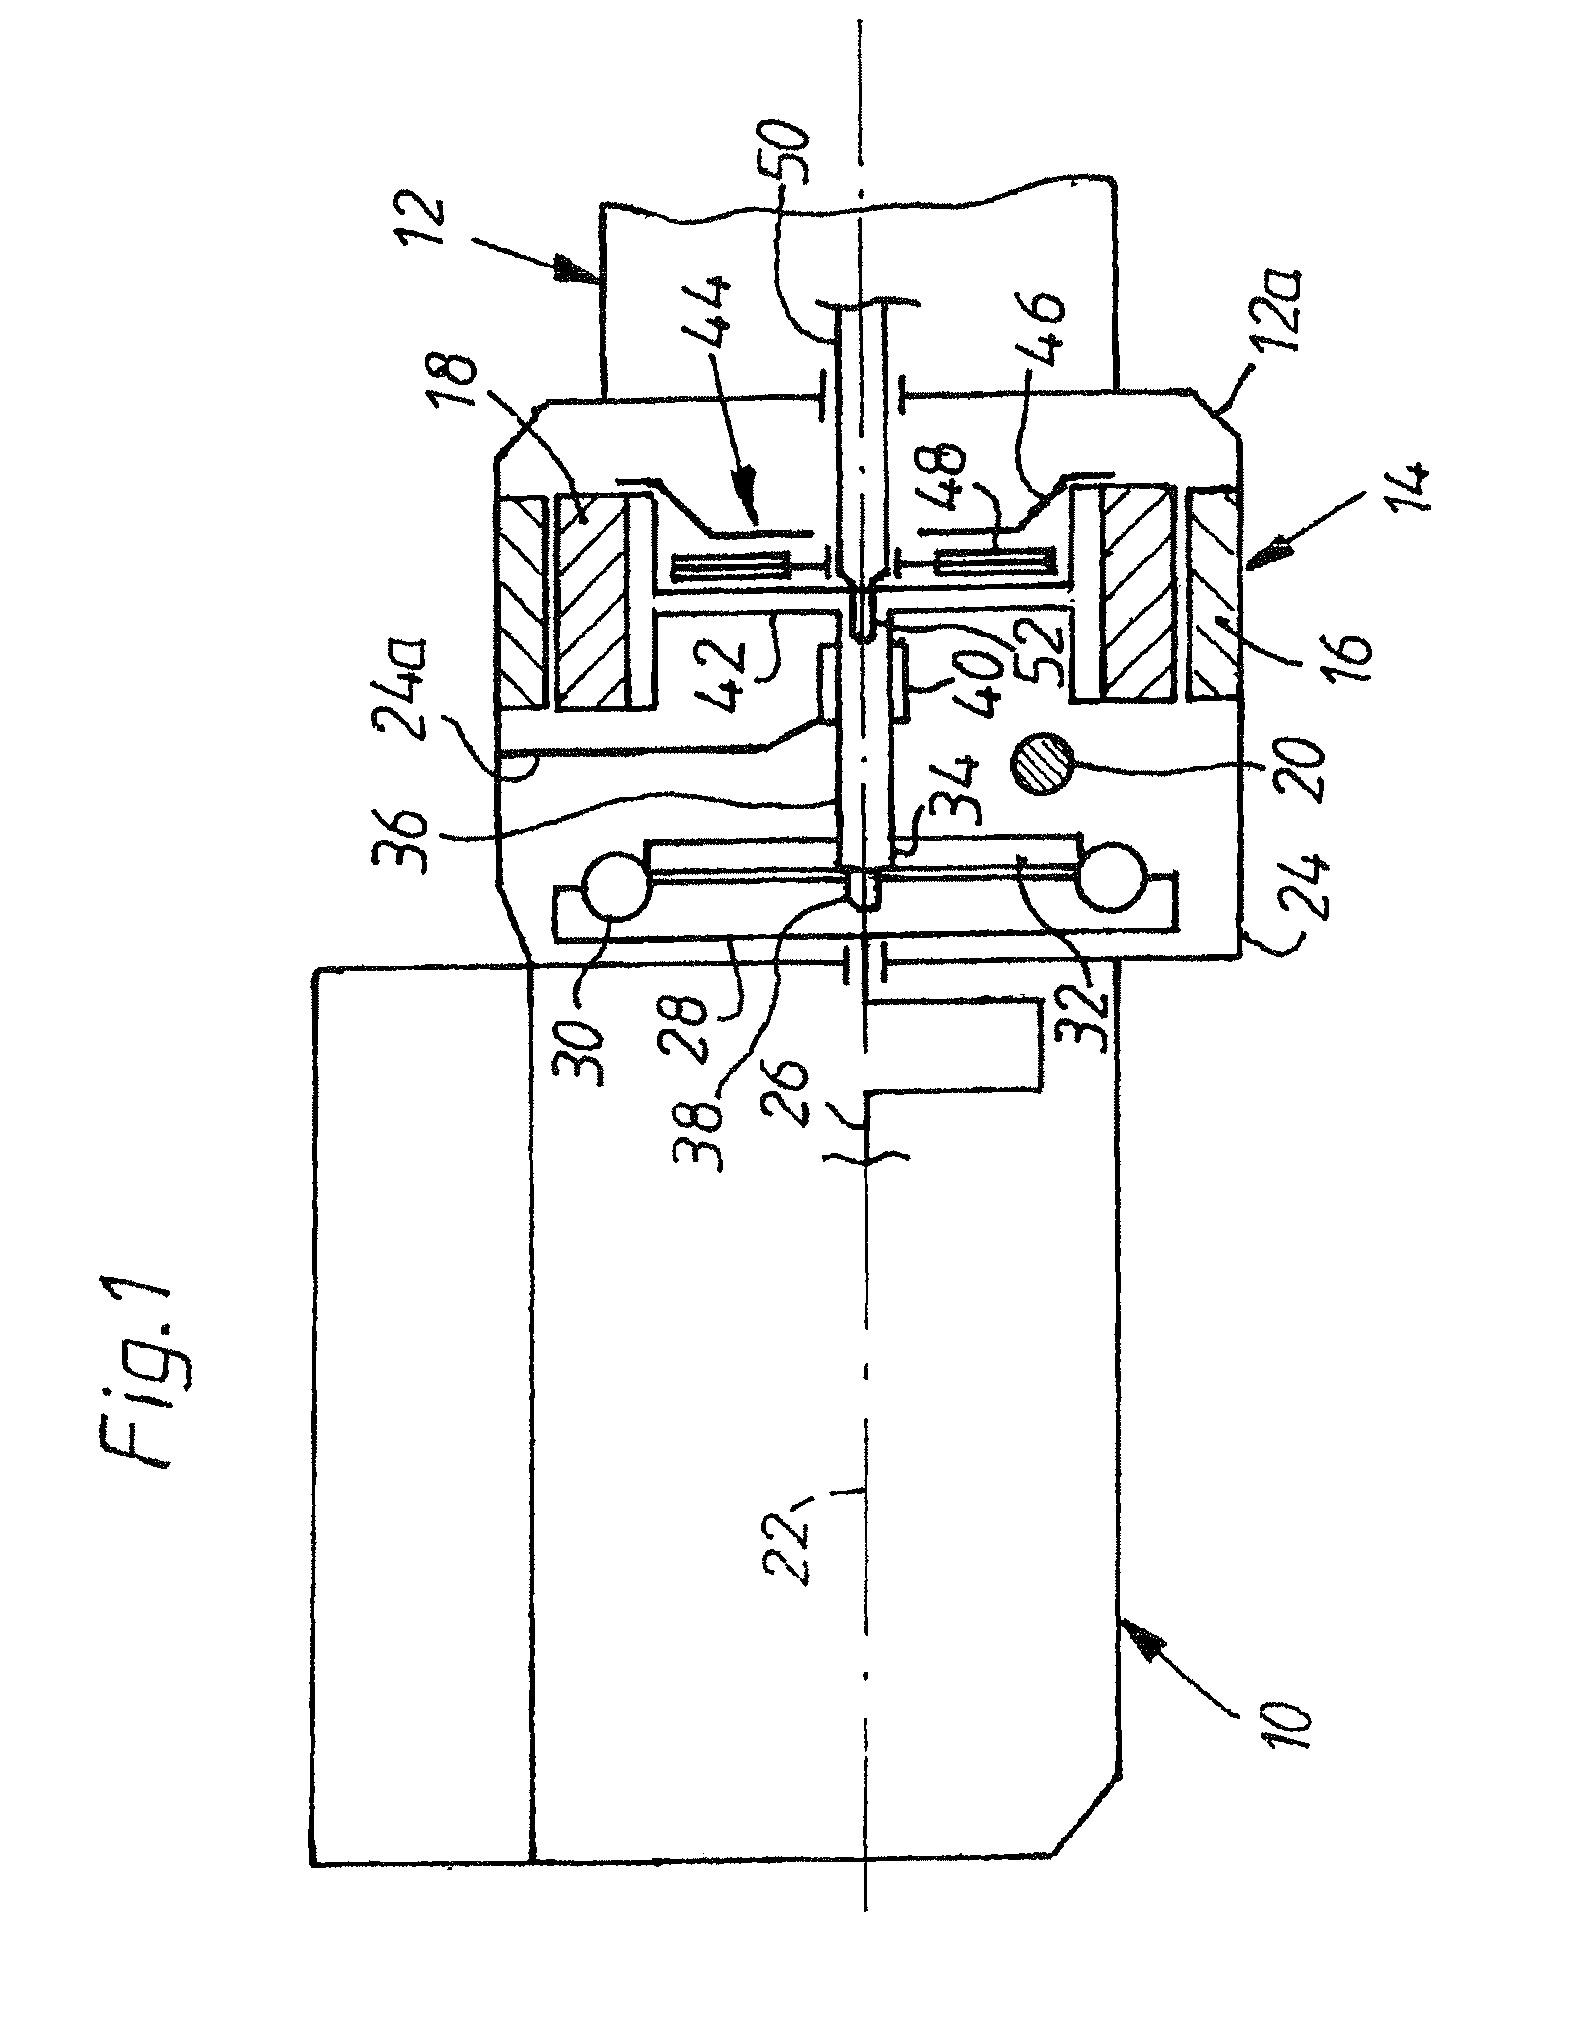 Arrangement of an electrical machine